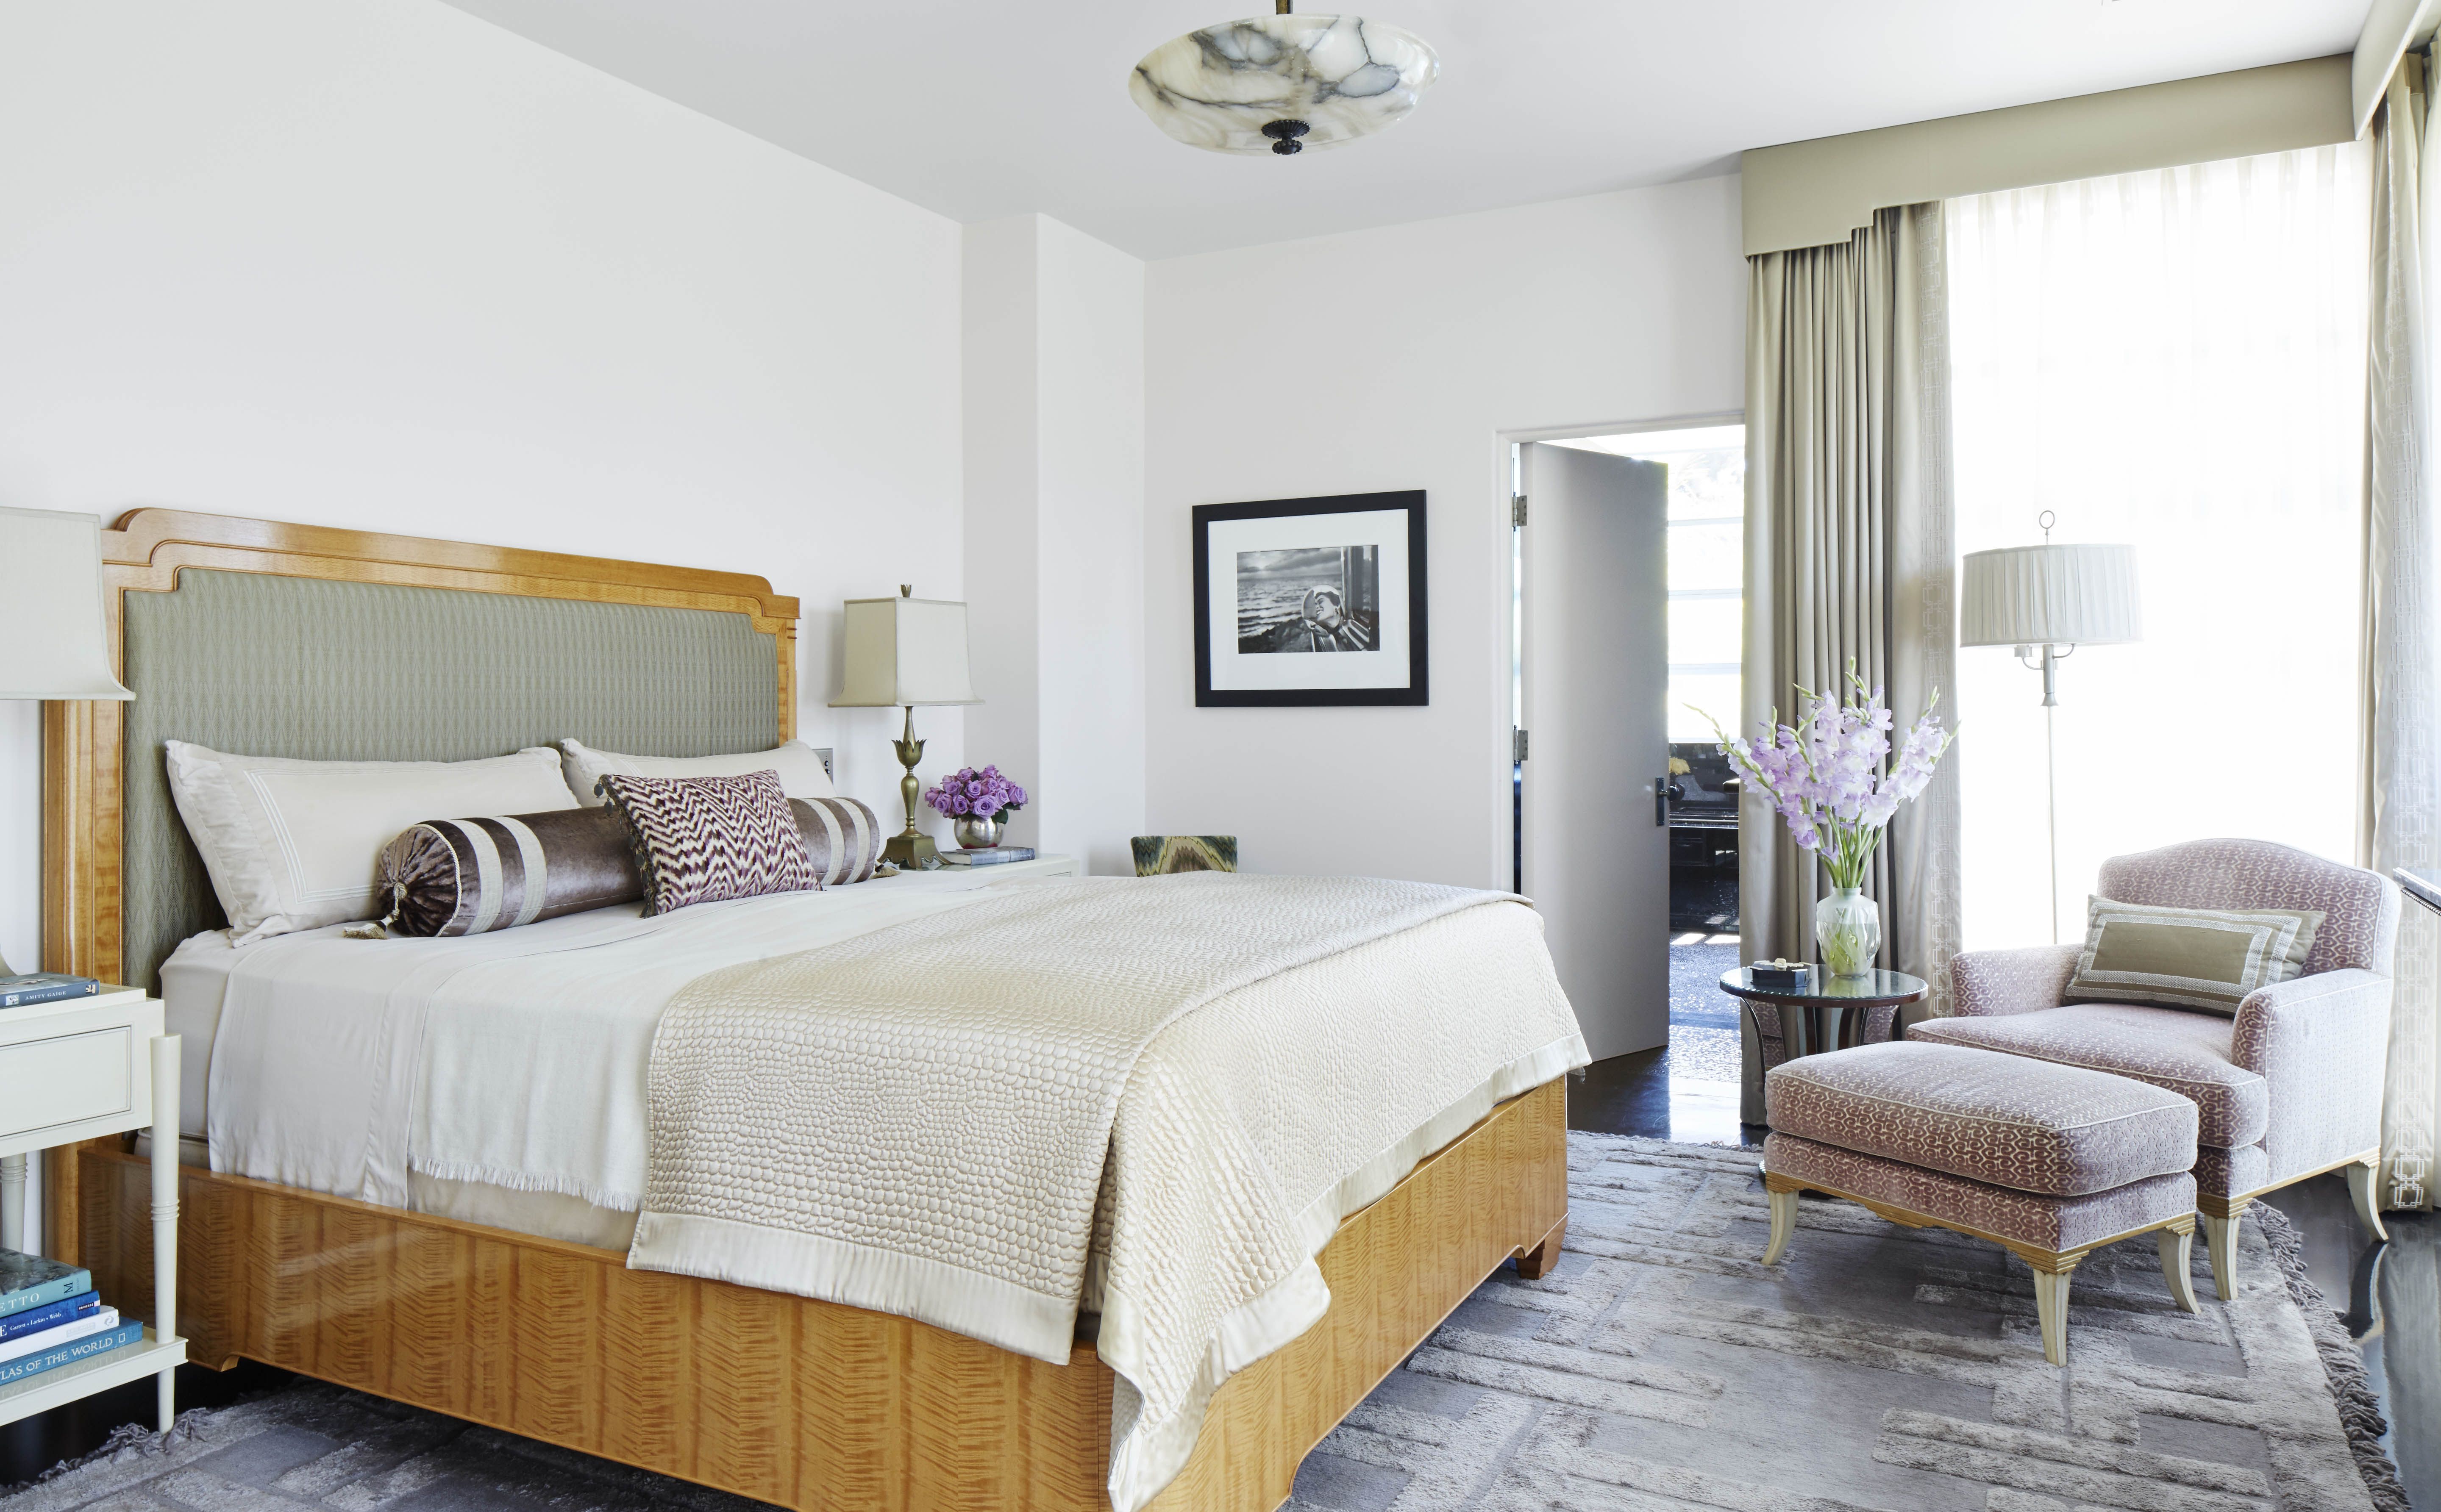 18 White Bedroom Ideas Luxury White Bedroom Designs And Decor